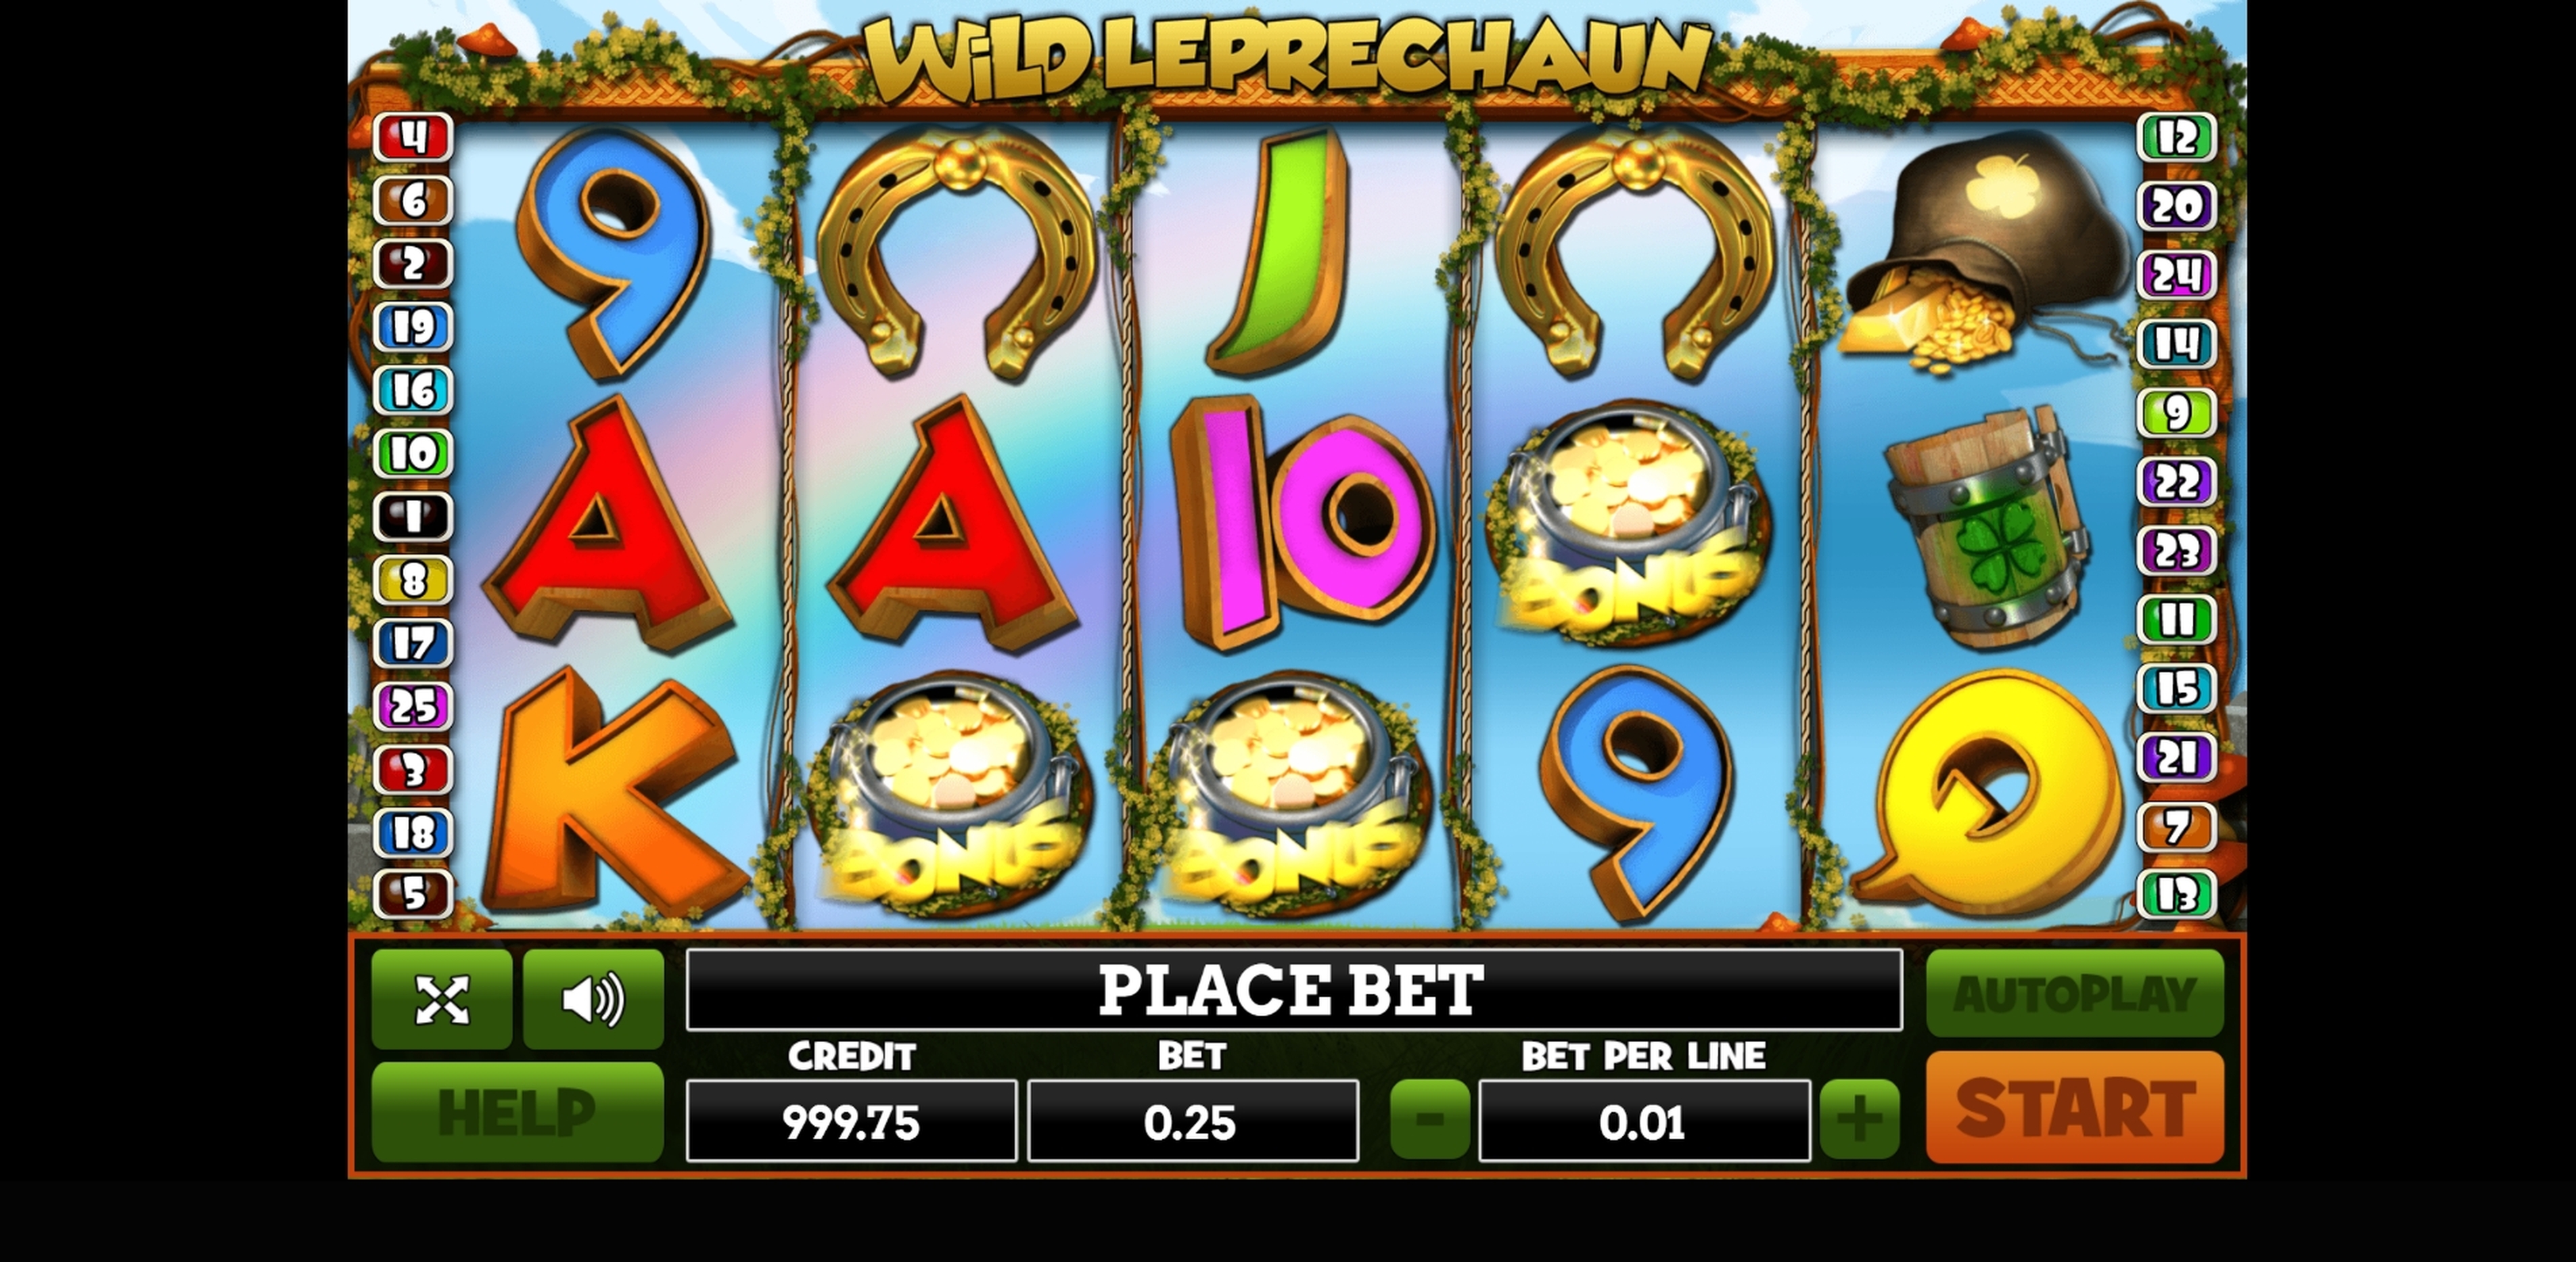 Win Money in Wild Leprechaun Free Slot Game by PlayPearls